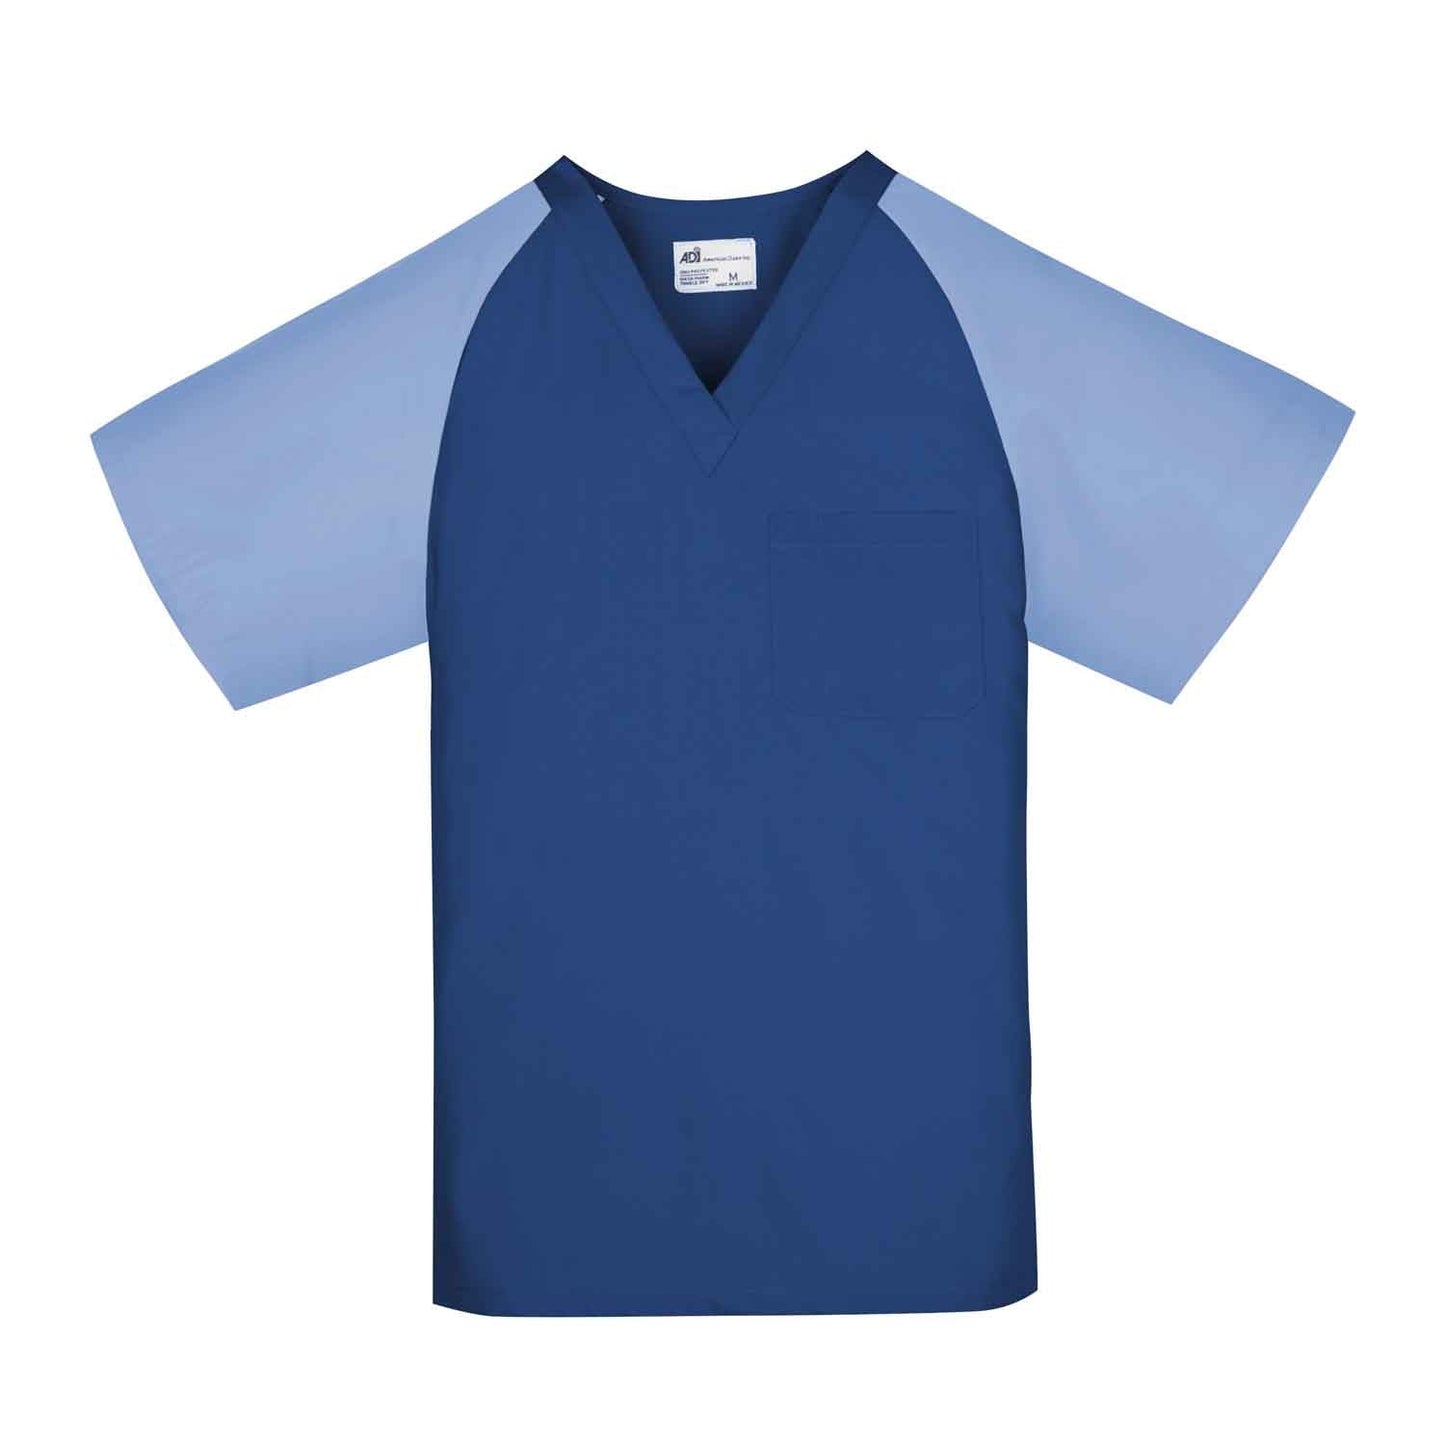 American Dawn | X-Small Navy Blue Scrub Top With Raglan Short Sleeves And 1 Pocket